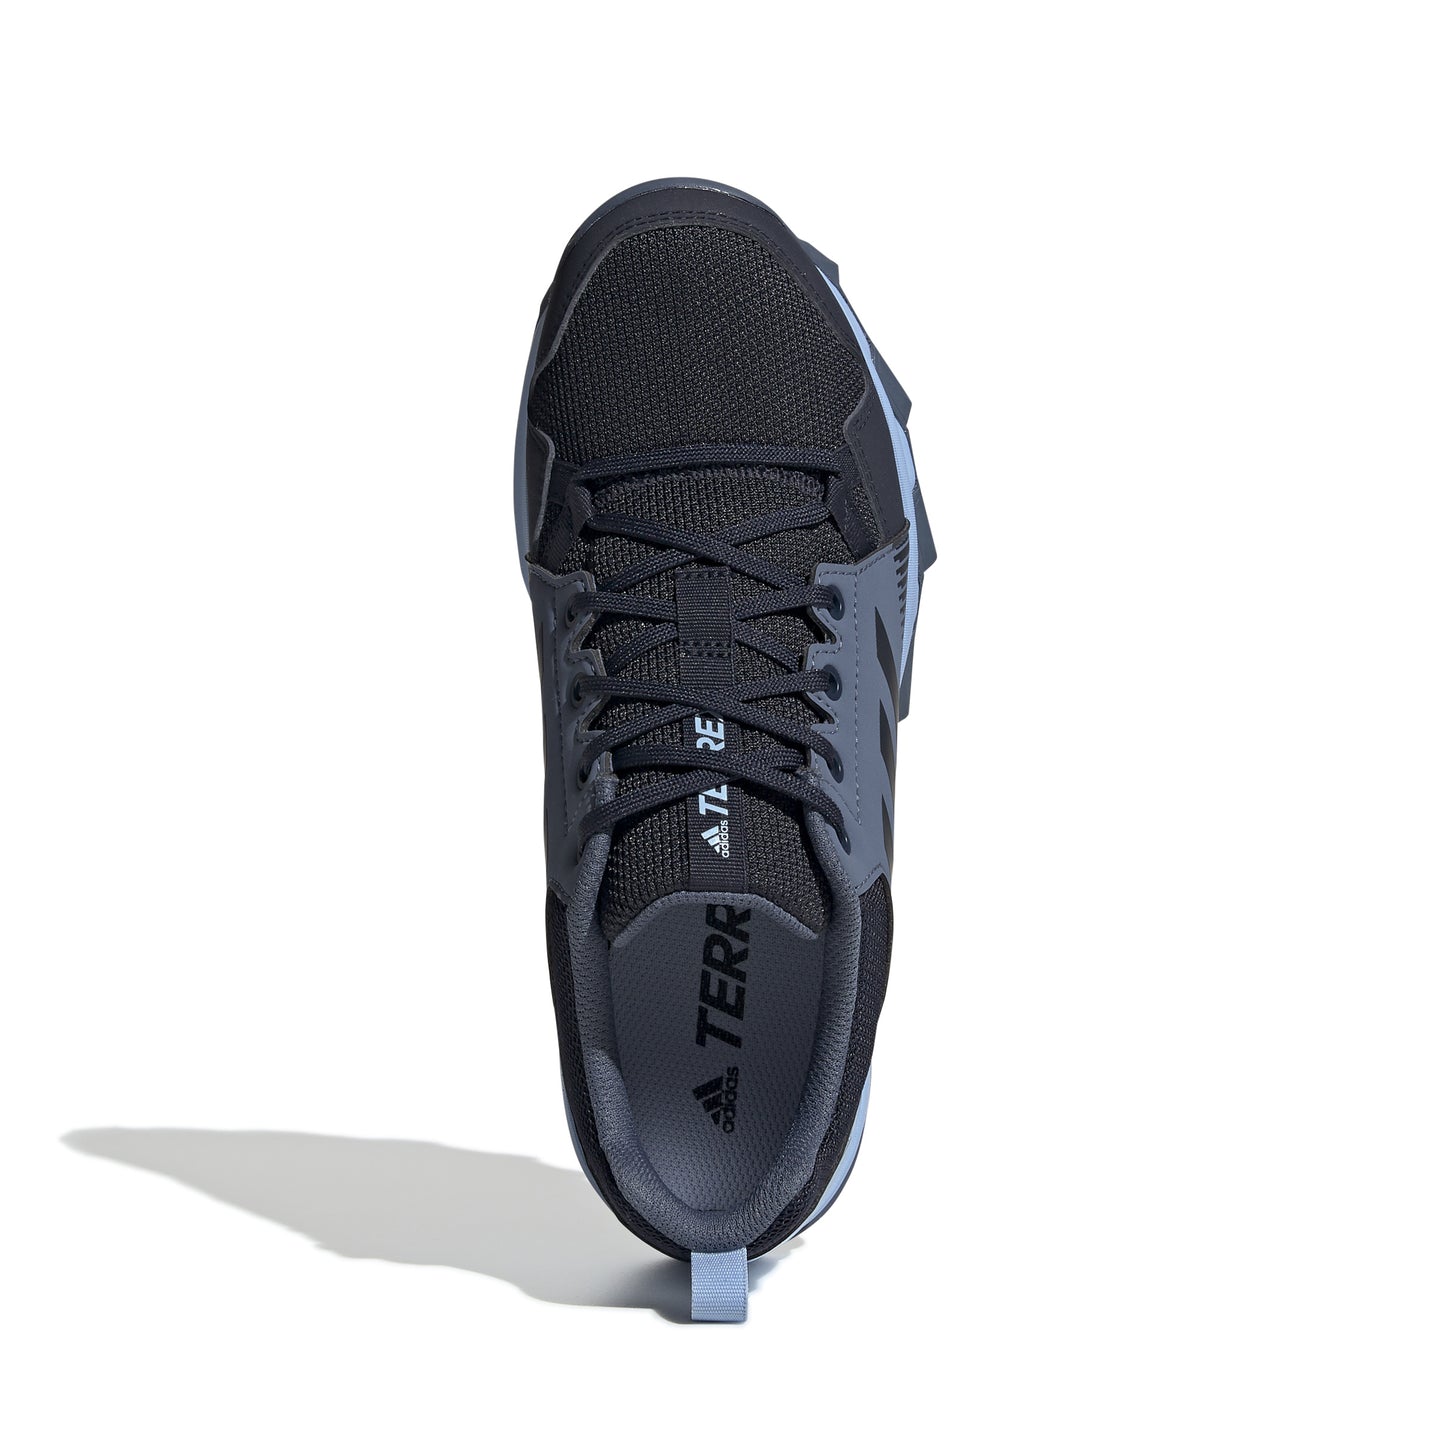 Adidas Terrex Tracerocker GTX Shoes